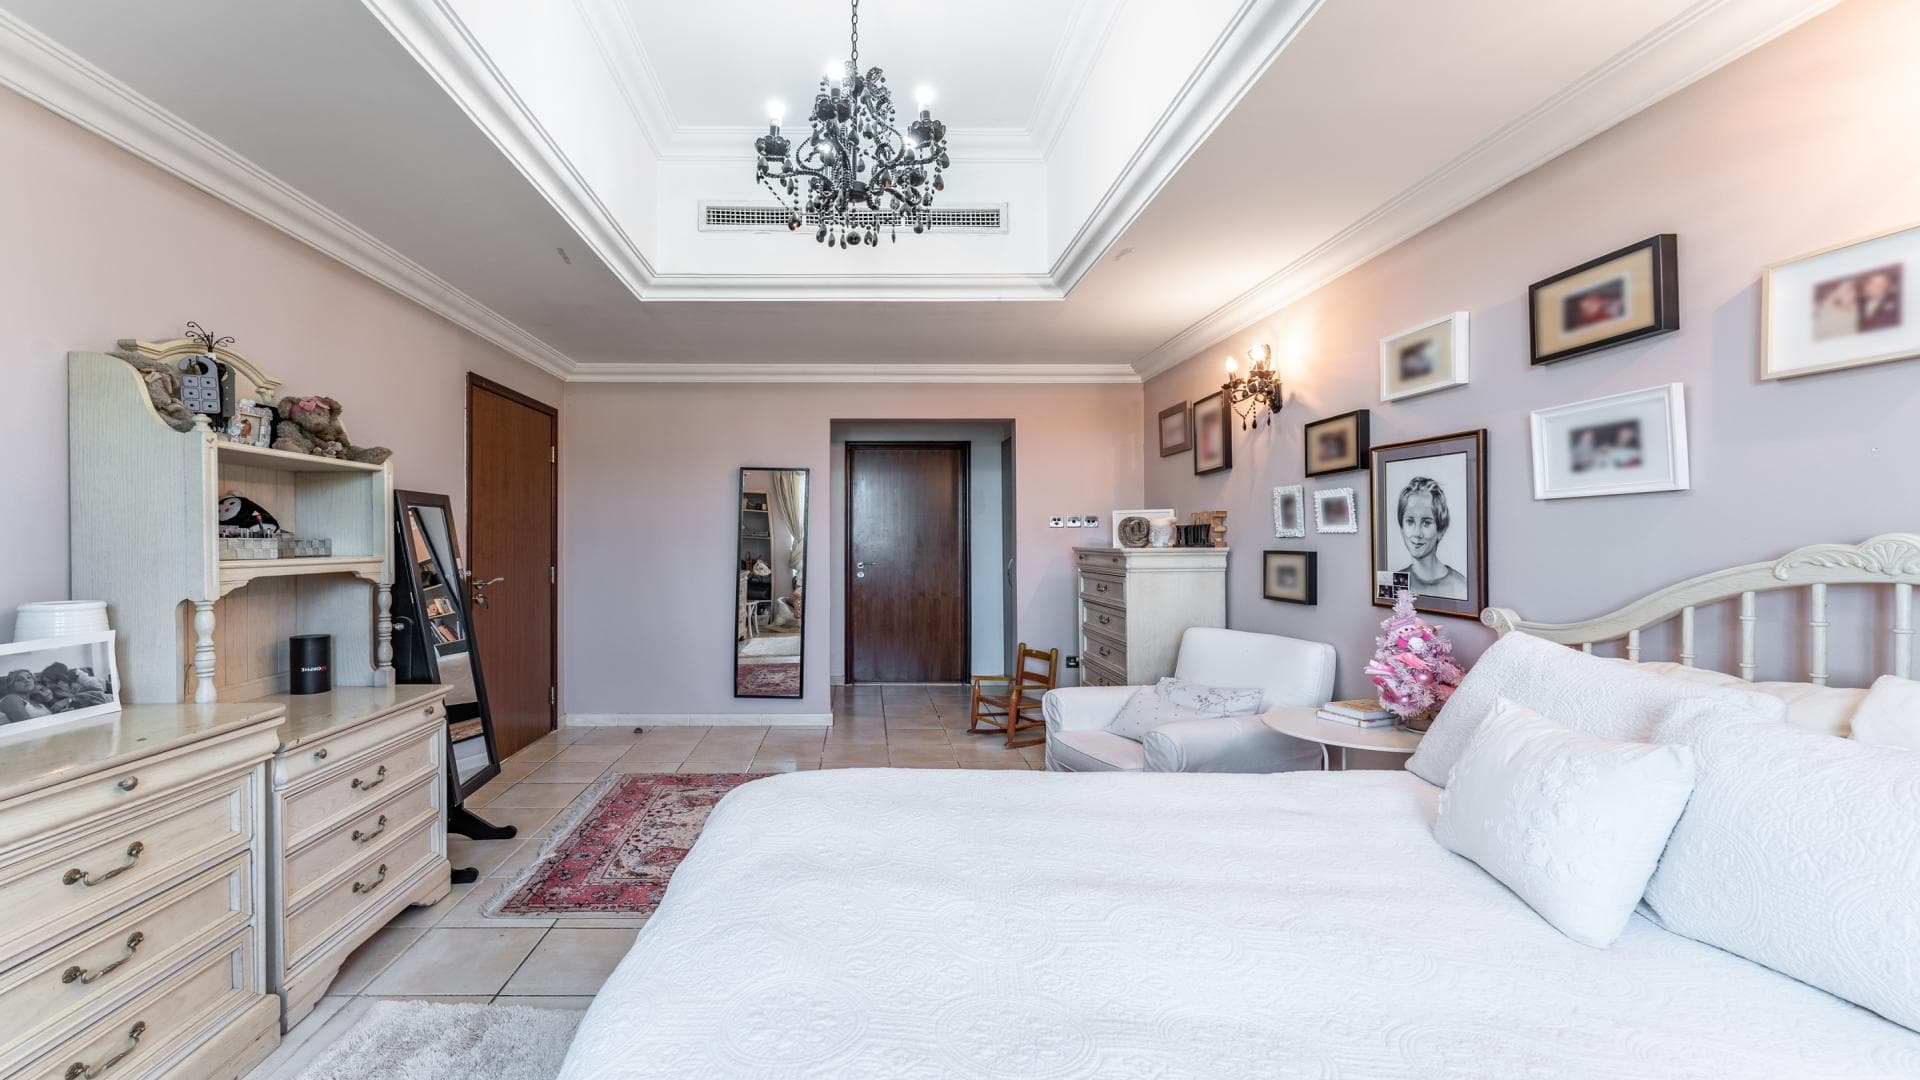 4 Bedroom Villa For Sale Mediterranean Clusters Lp37075 Ed6d0c4a8624000.jpg